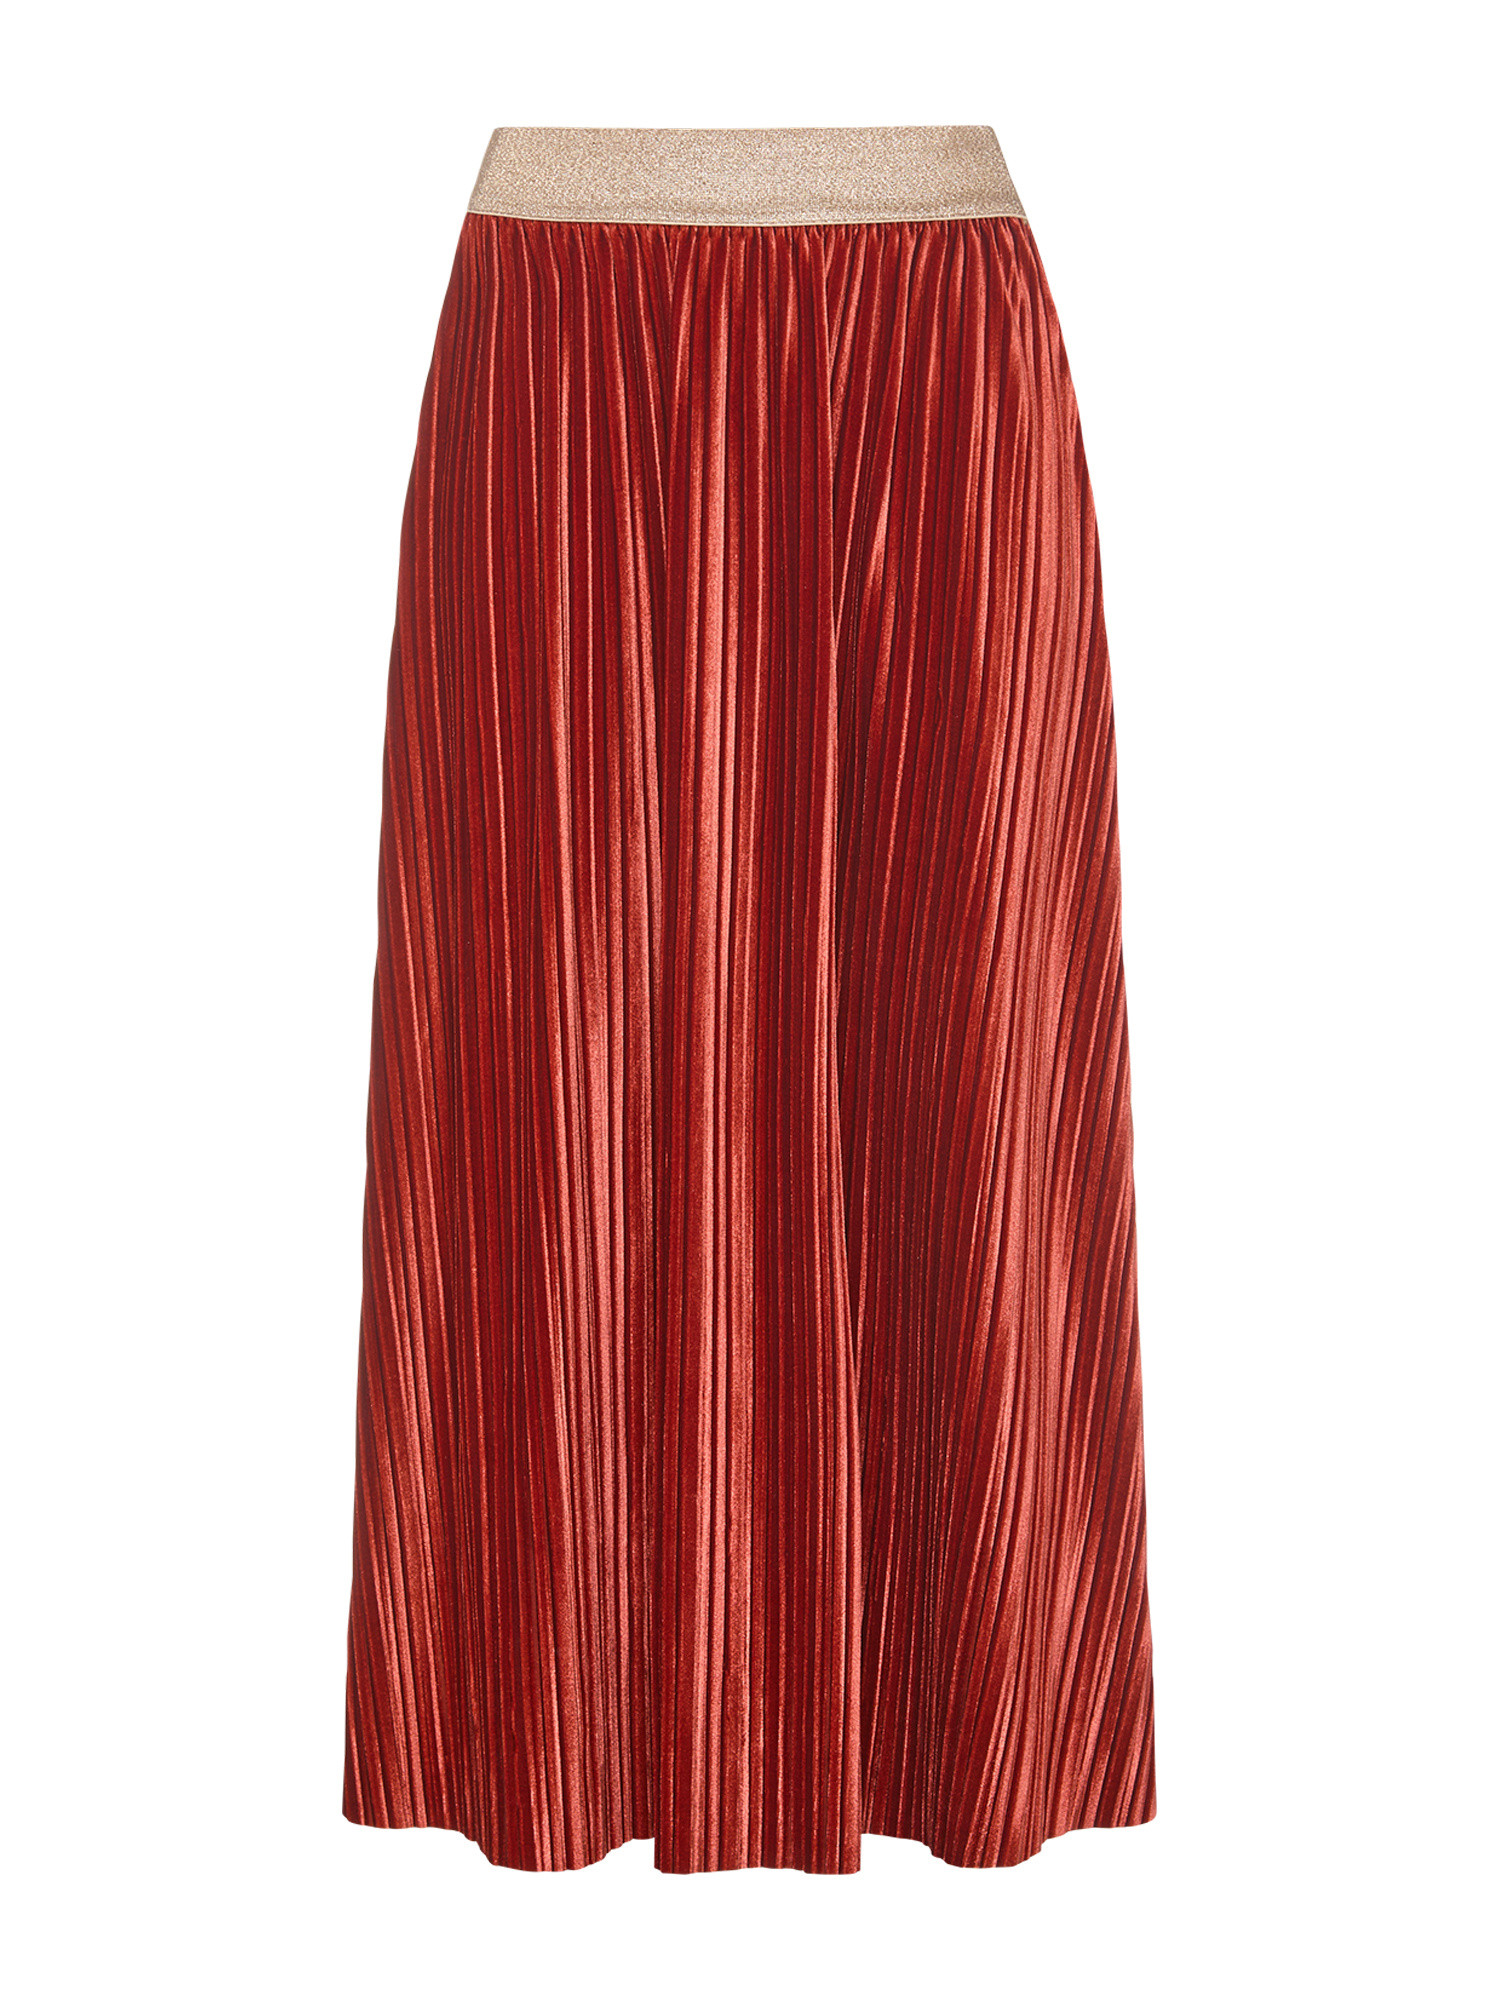 Koan - Flared skirt in pleated effect velvet, Copper Brown, large image number 0